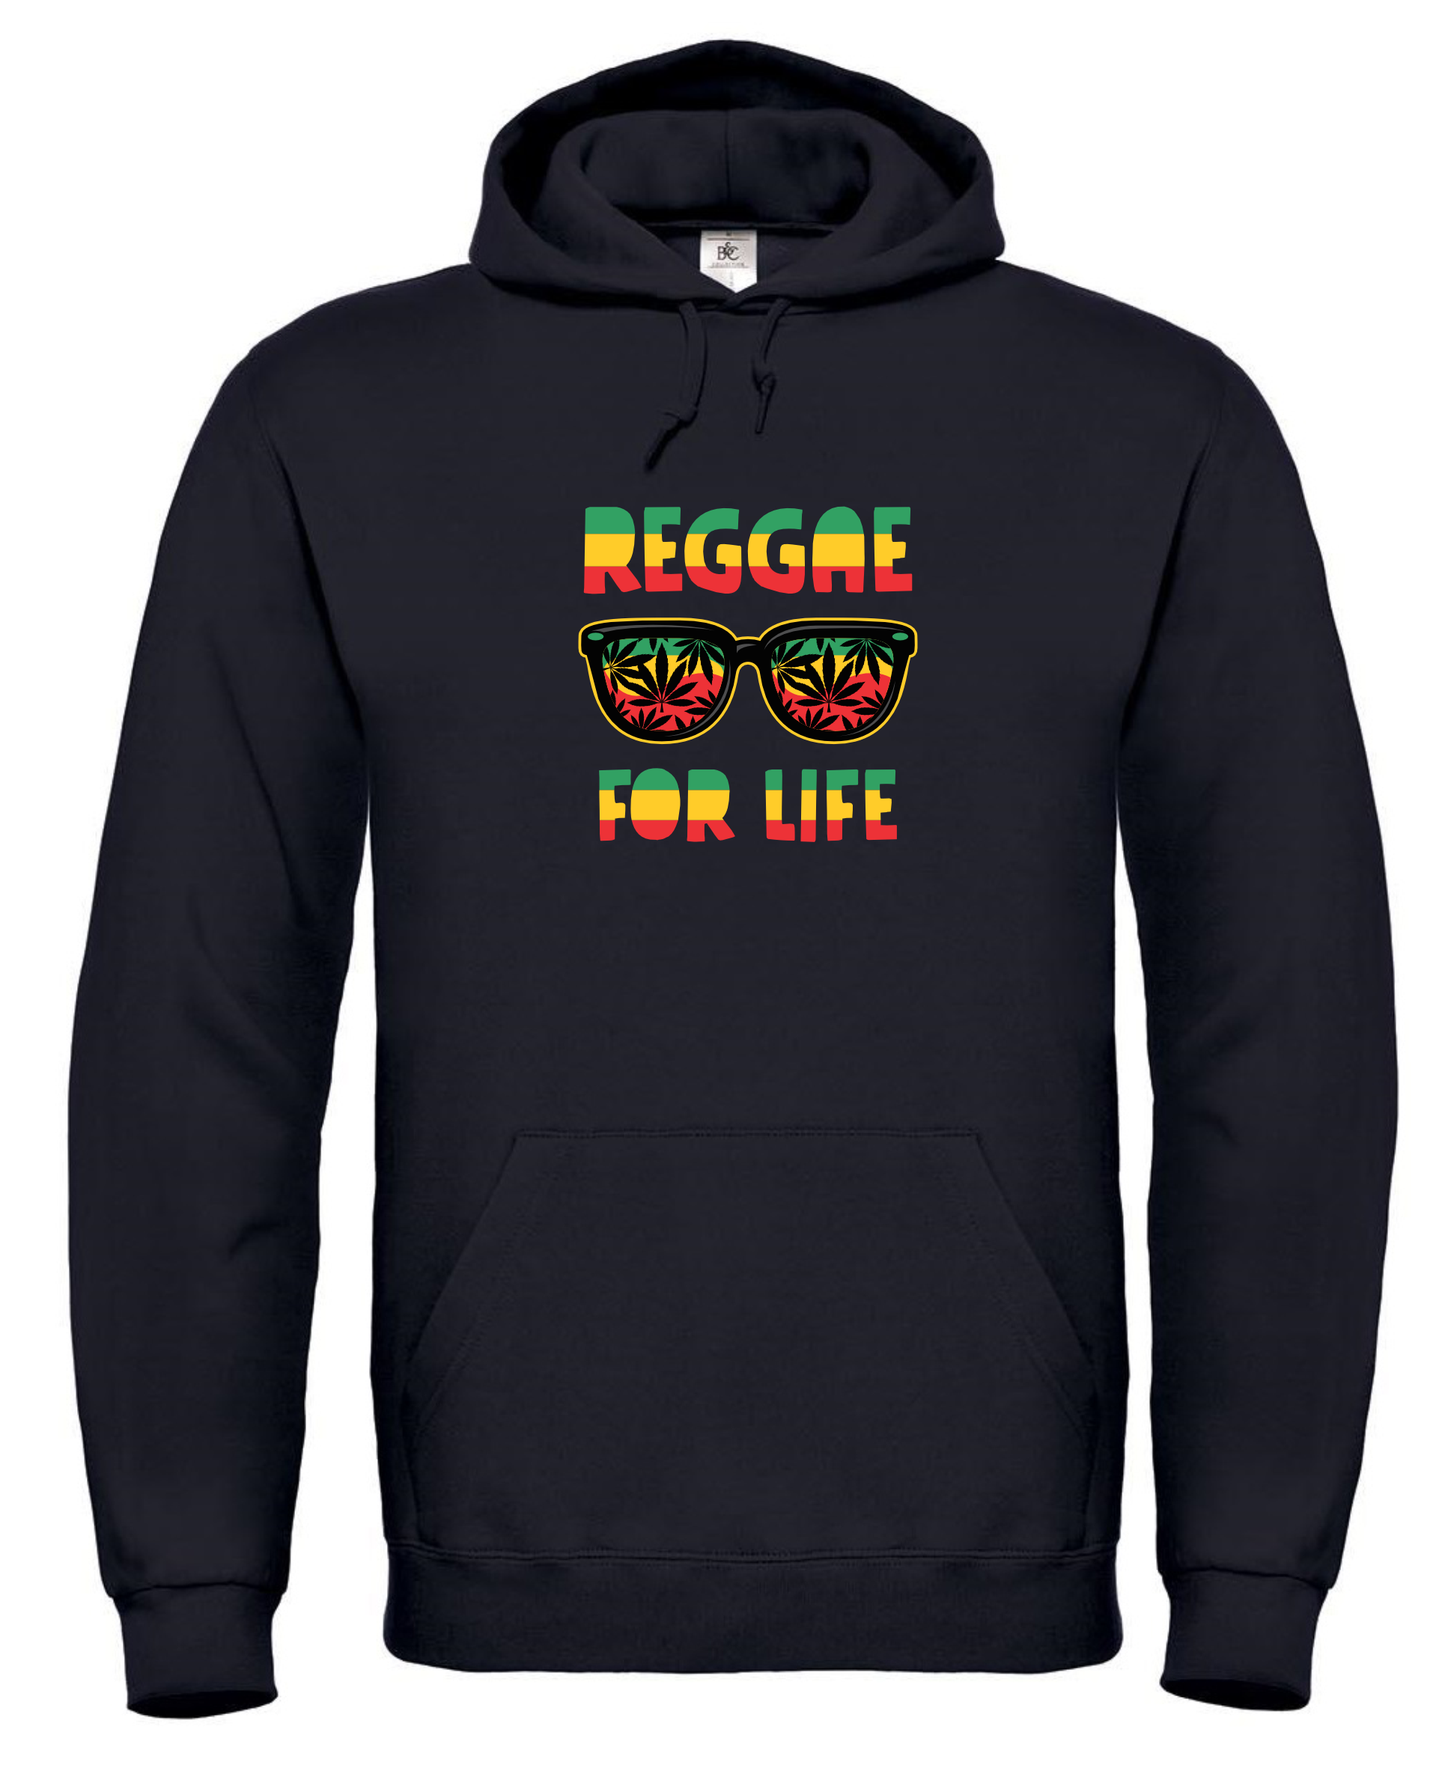 Reggae for life - Hoodie S